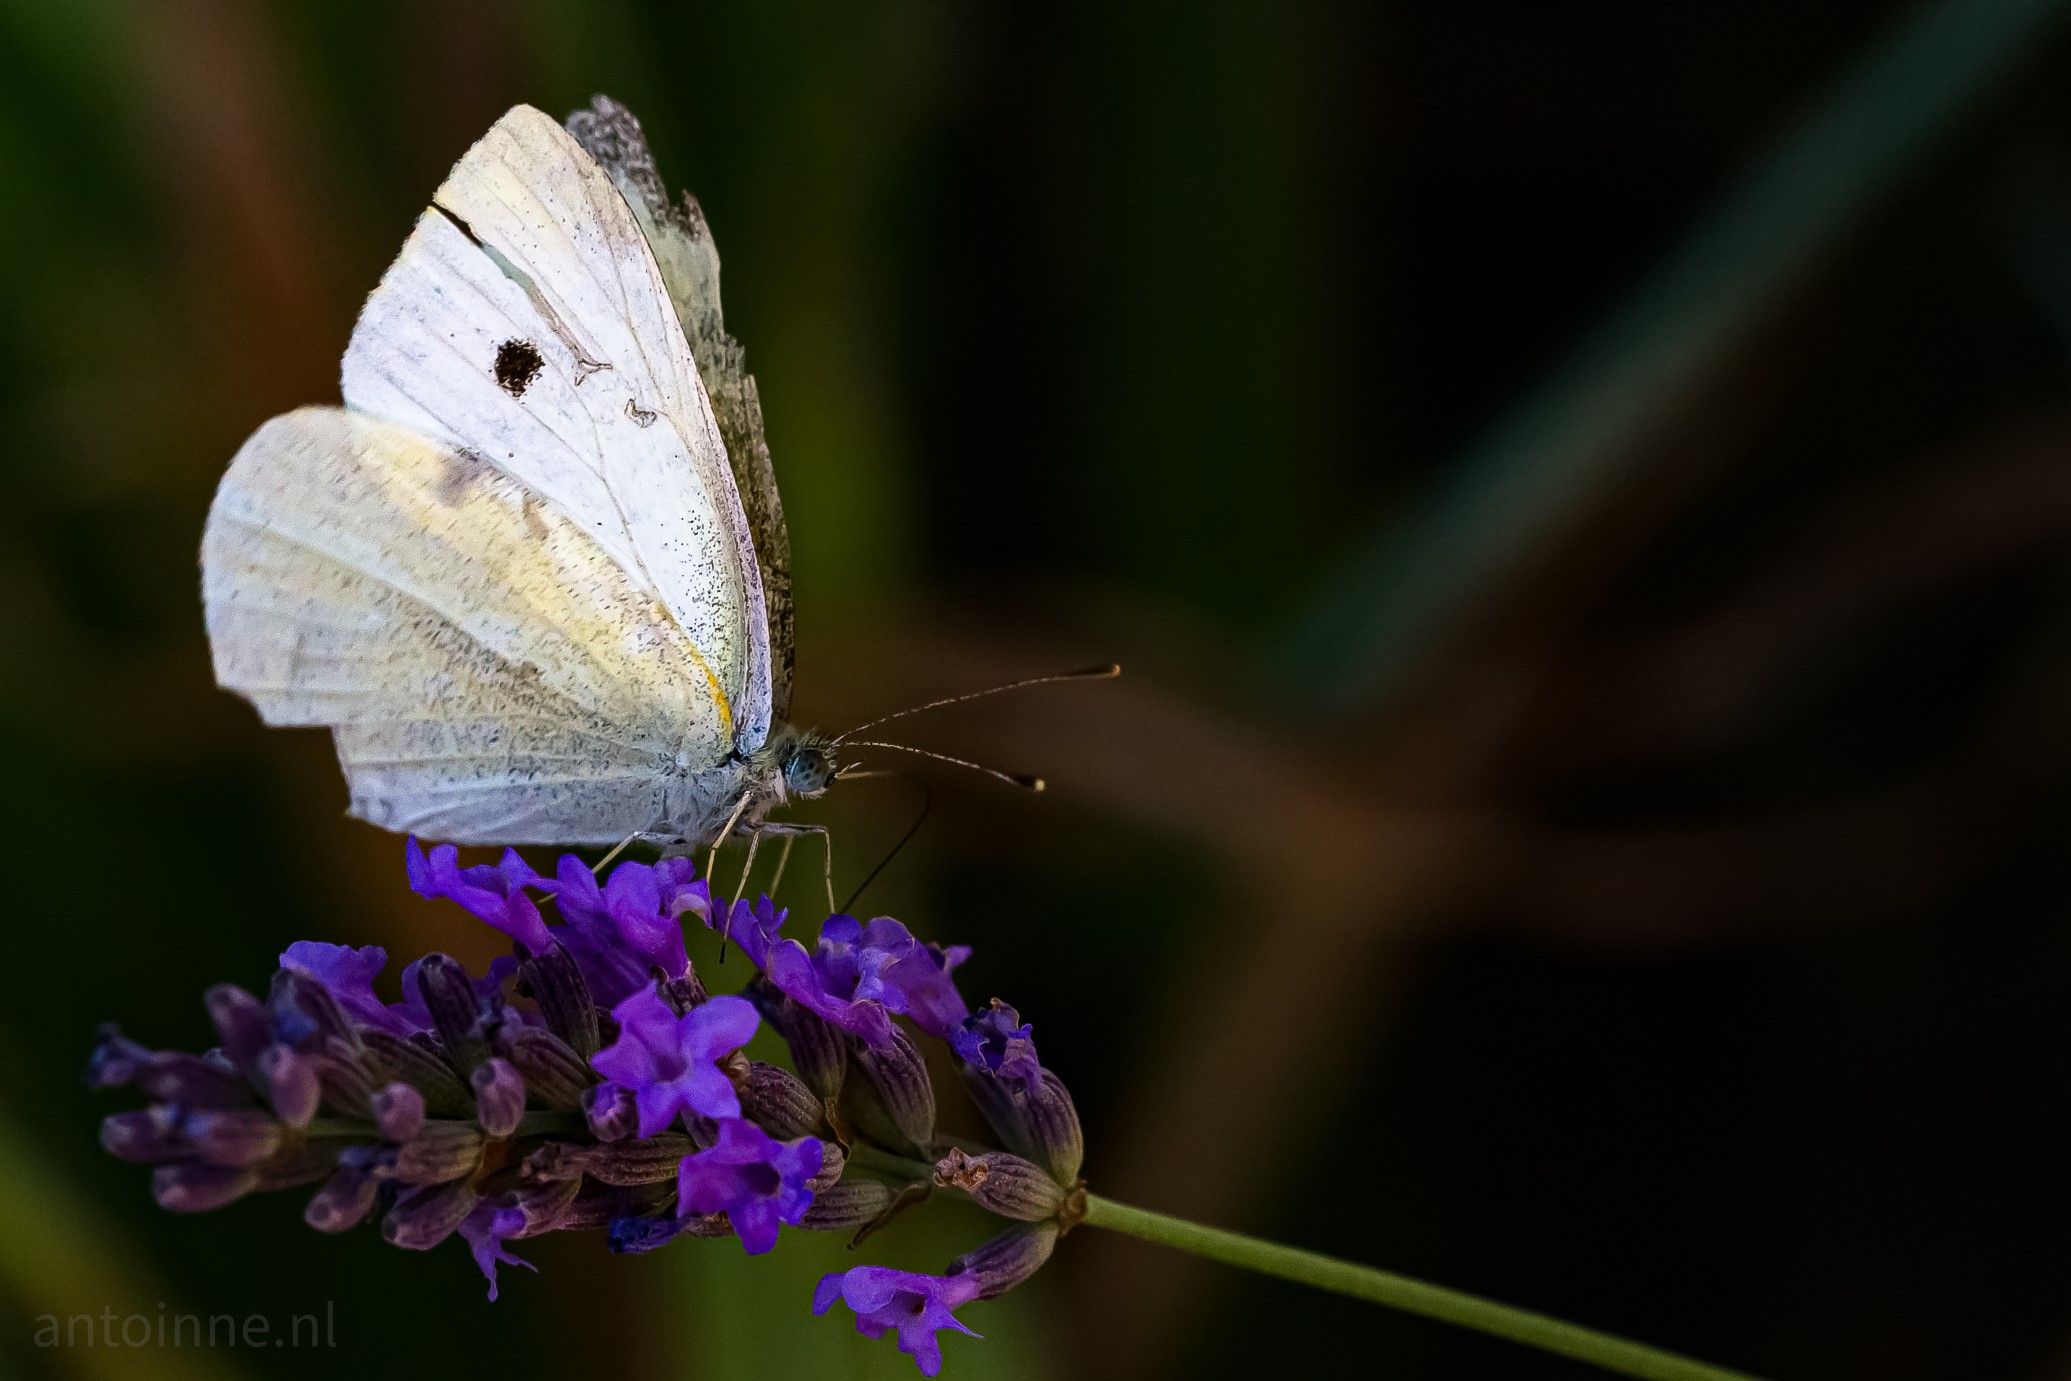 A butterfly on a flower (somewhere near Nimes, France)